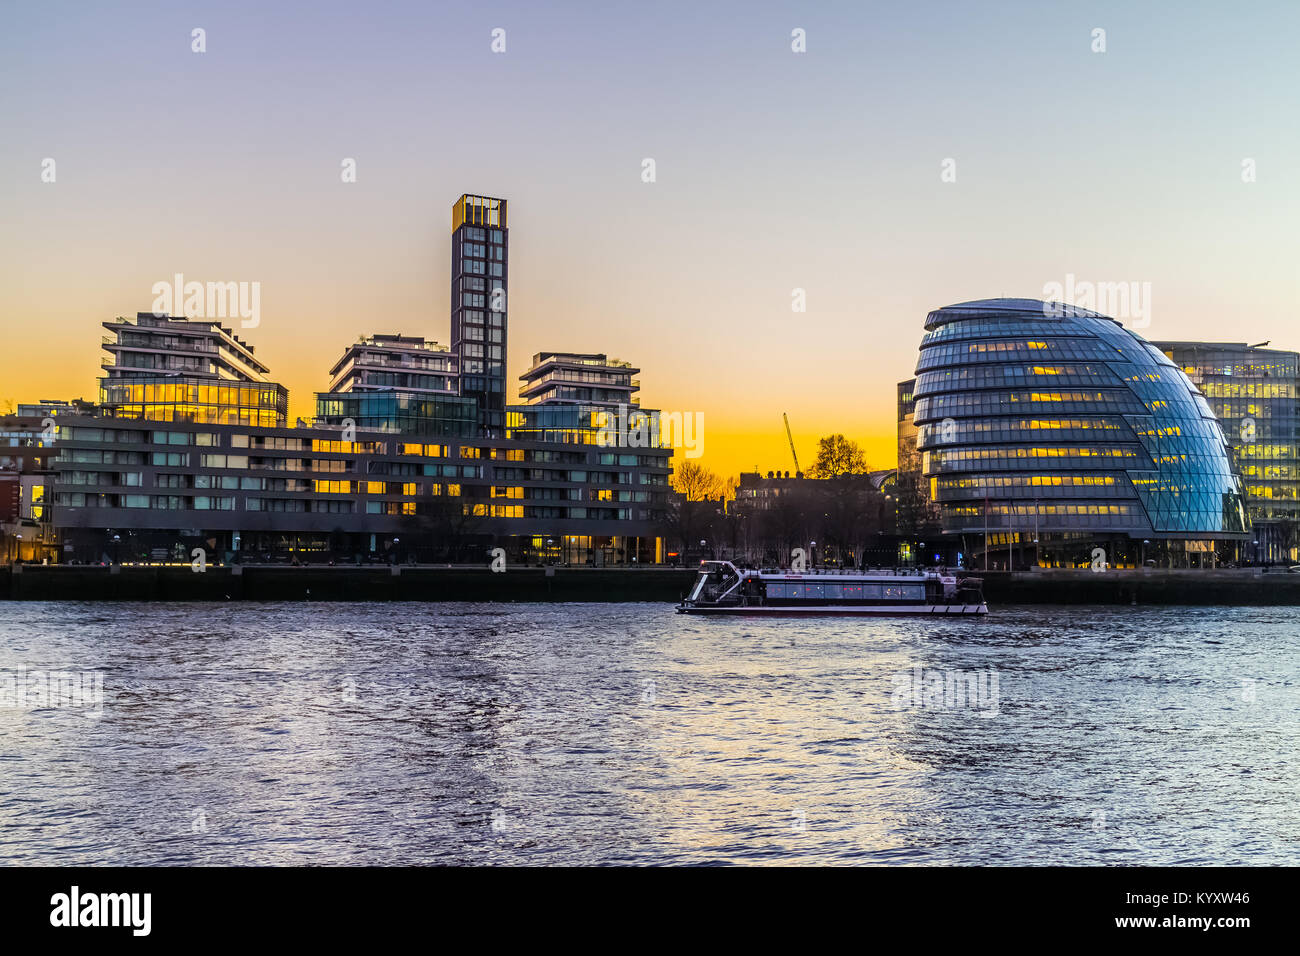 City Hall, Embankment / River Thames, London Stock Photo